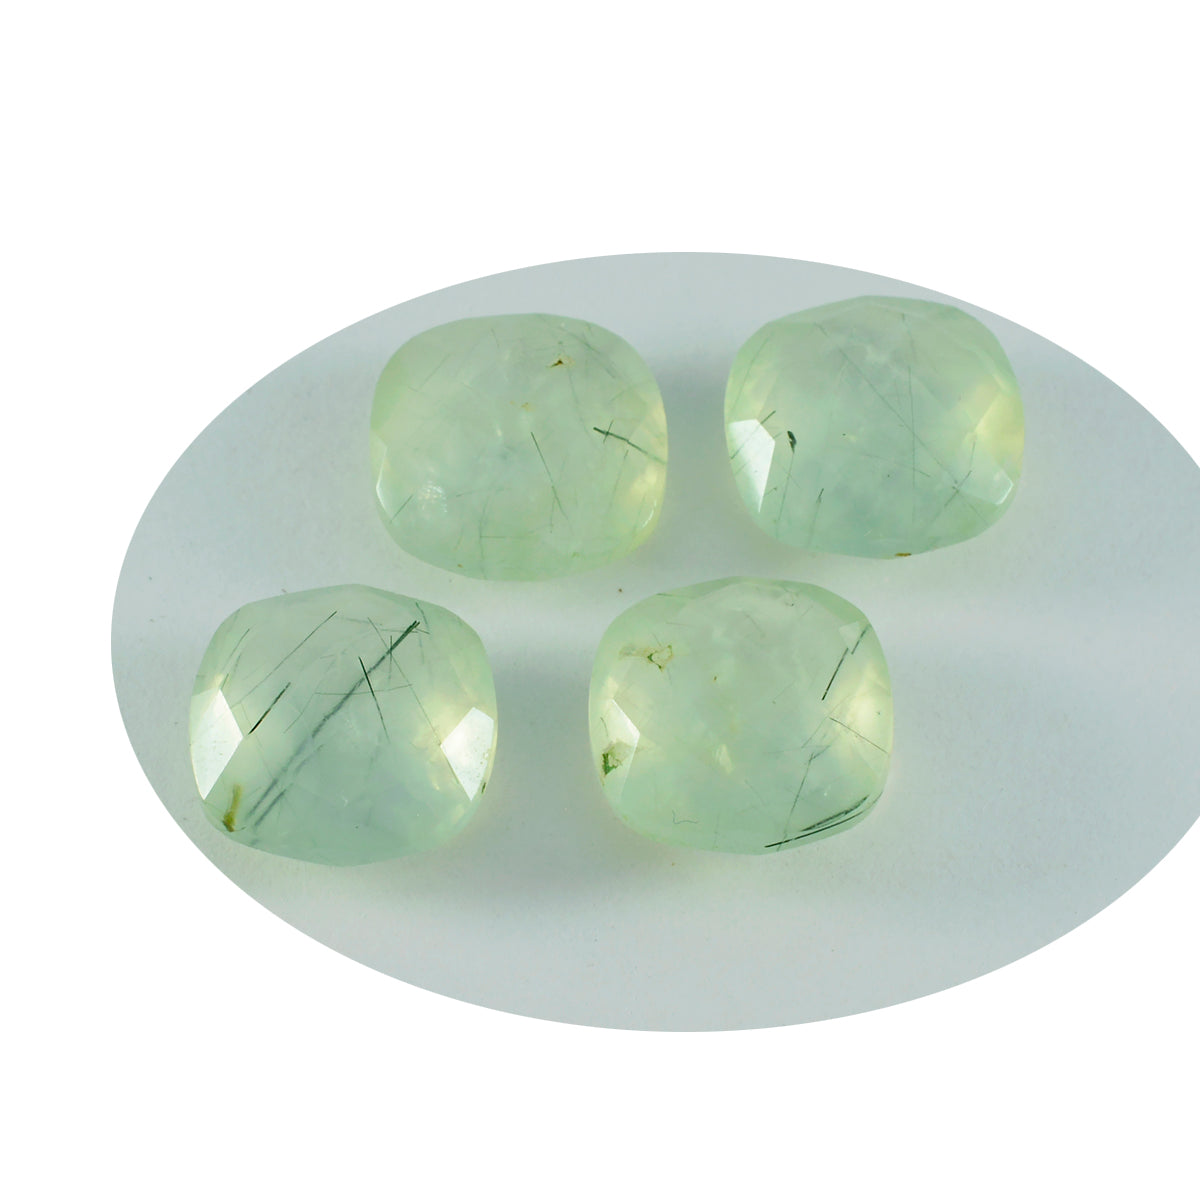 Riyogems 1PC Green Prehnite Faceted 15x15 mm Cushion Shape nice-looking Quality Stone